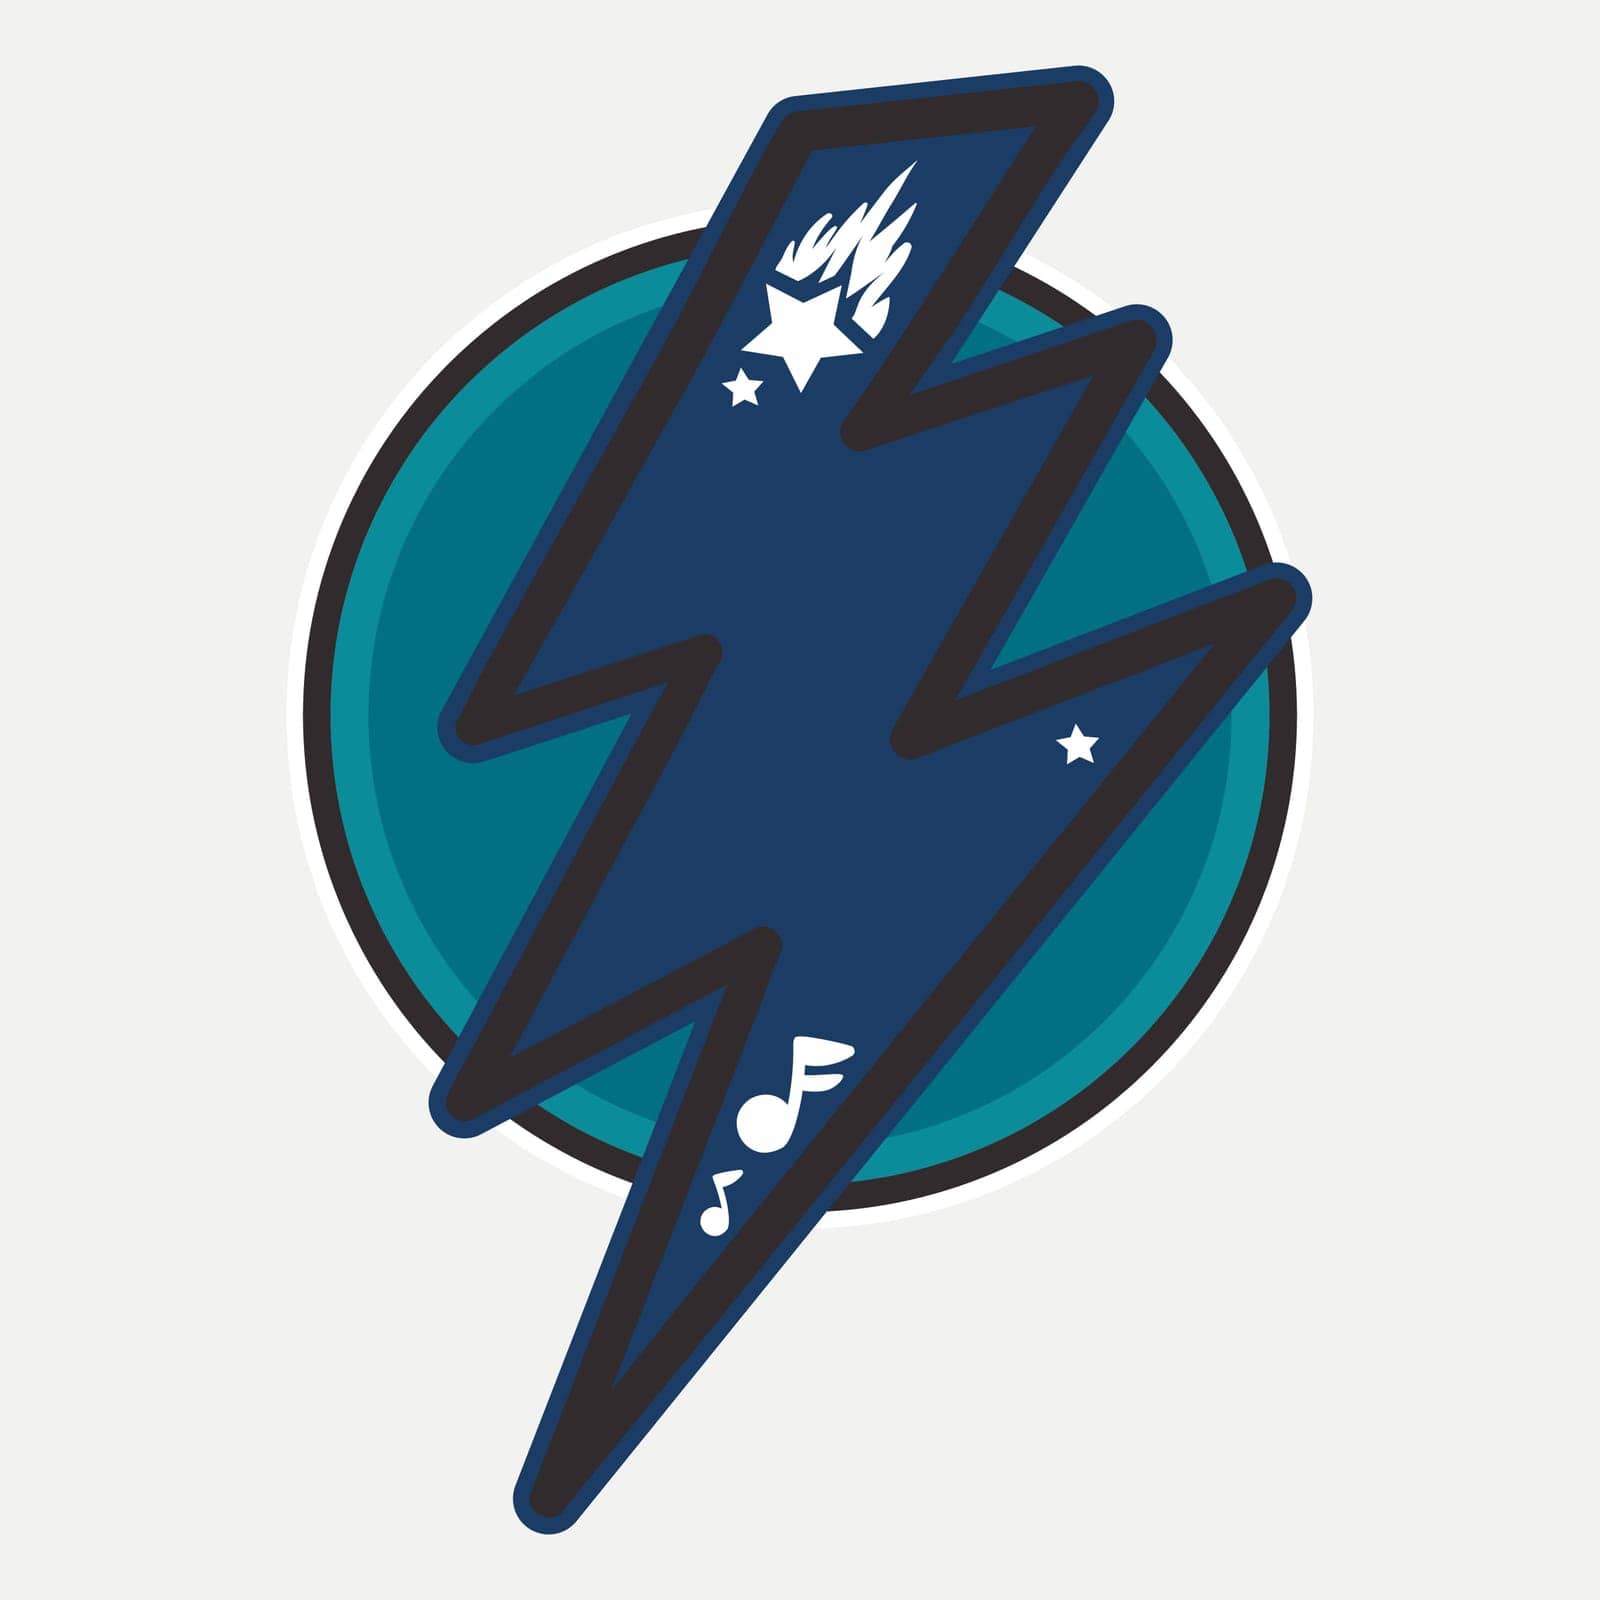 Thunder flat color illustration. Lightning bolt in circle. Speed, energy hand drawn design element